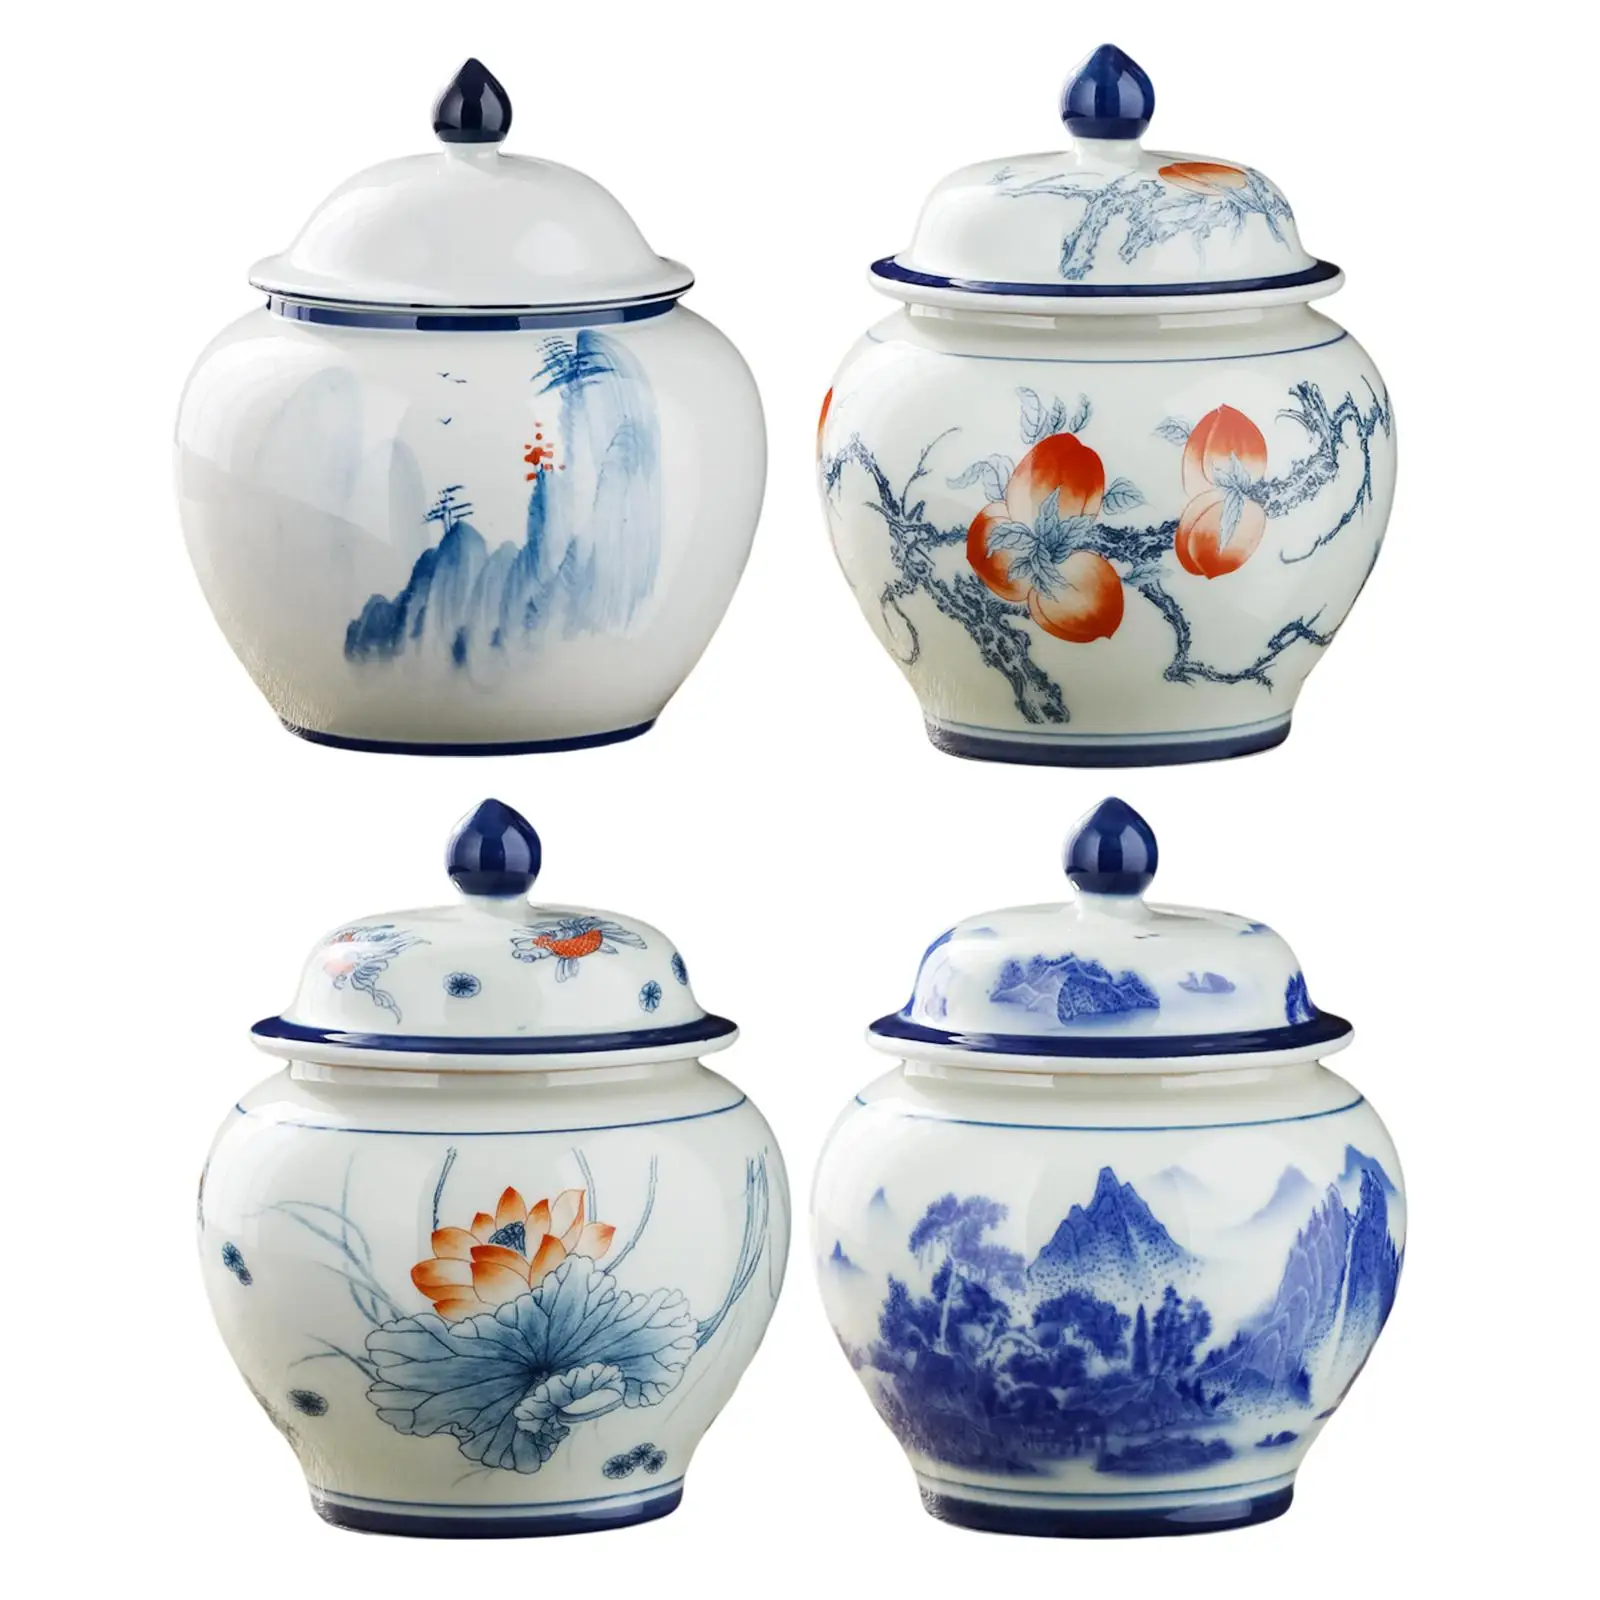 Blue and Ginger Jar Tea Storage Jar 13.3x16cm Table Decoration Handicraft Multi Purpose Glazed Enamel Traditional